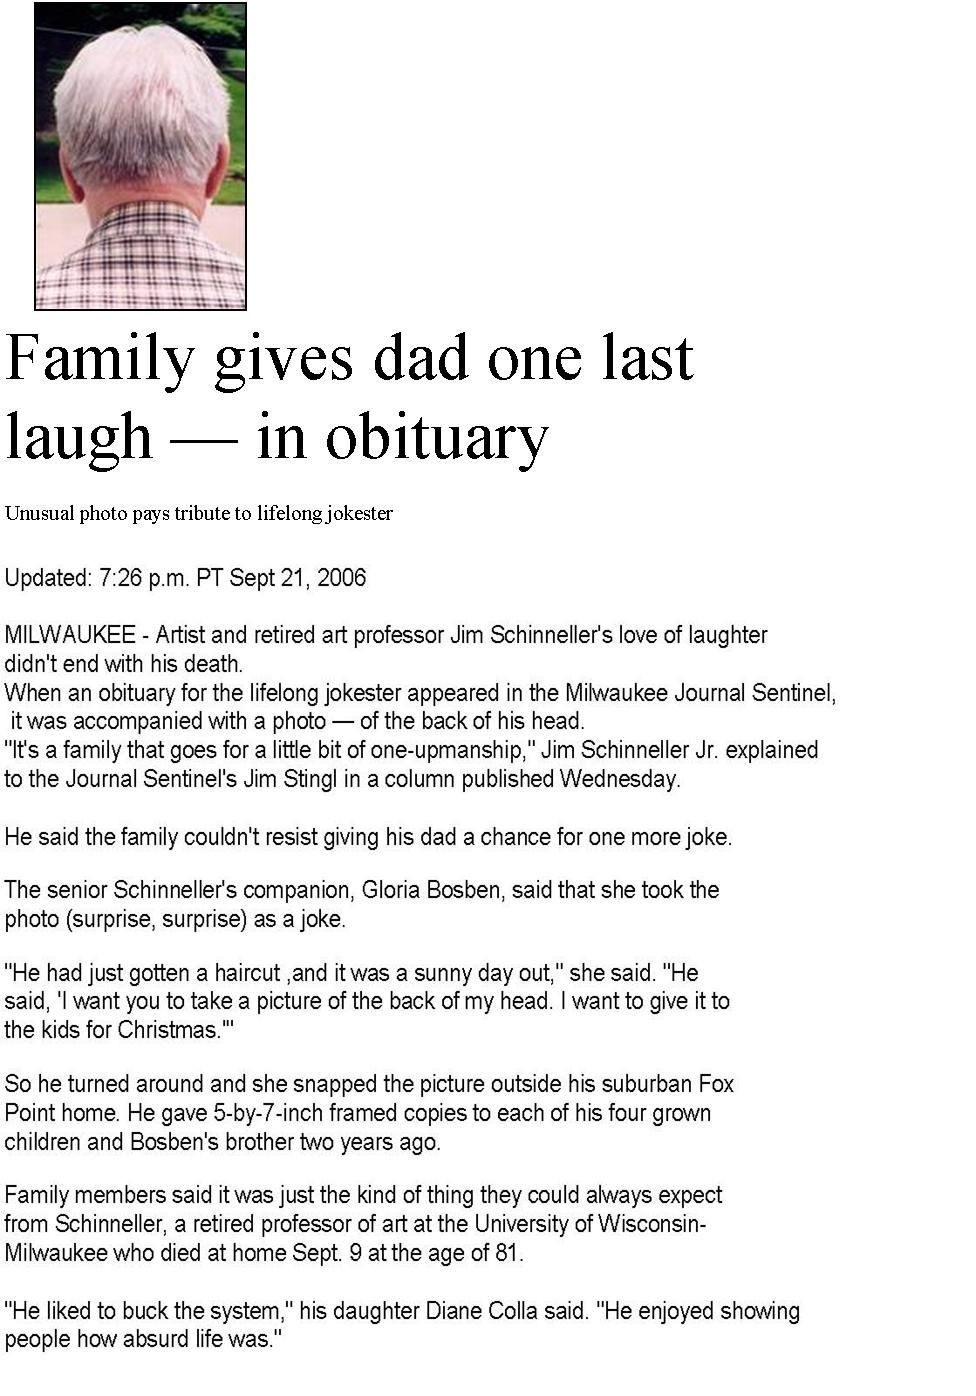 Obituary Examples, Sample Obituary. Make It Unique With These - Free Printable Obituary